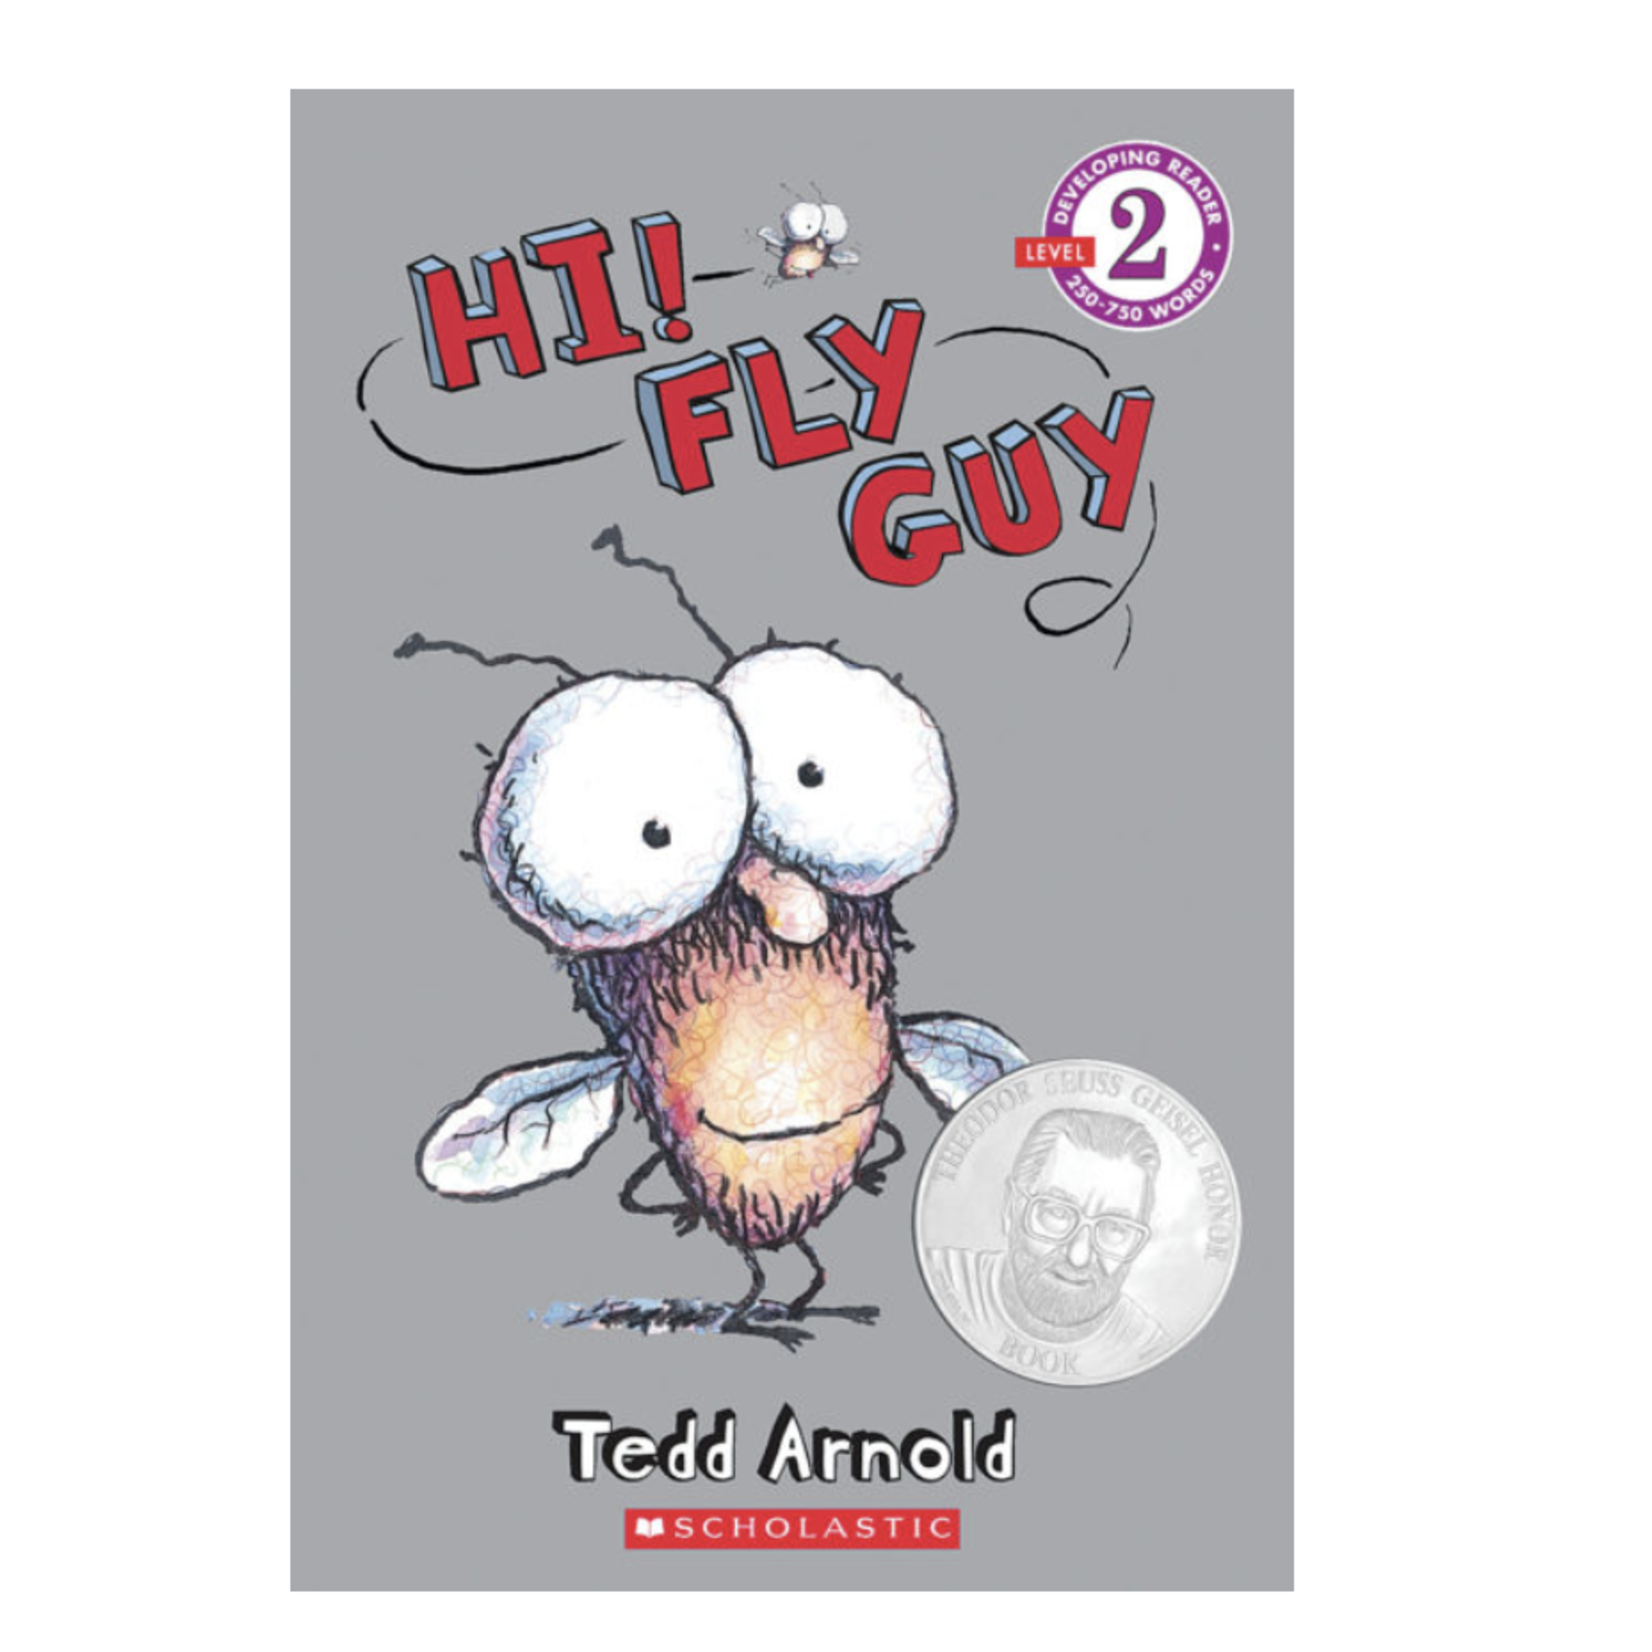 Scholastic Books FLY GUY #1: HI! FLY GUY